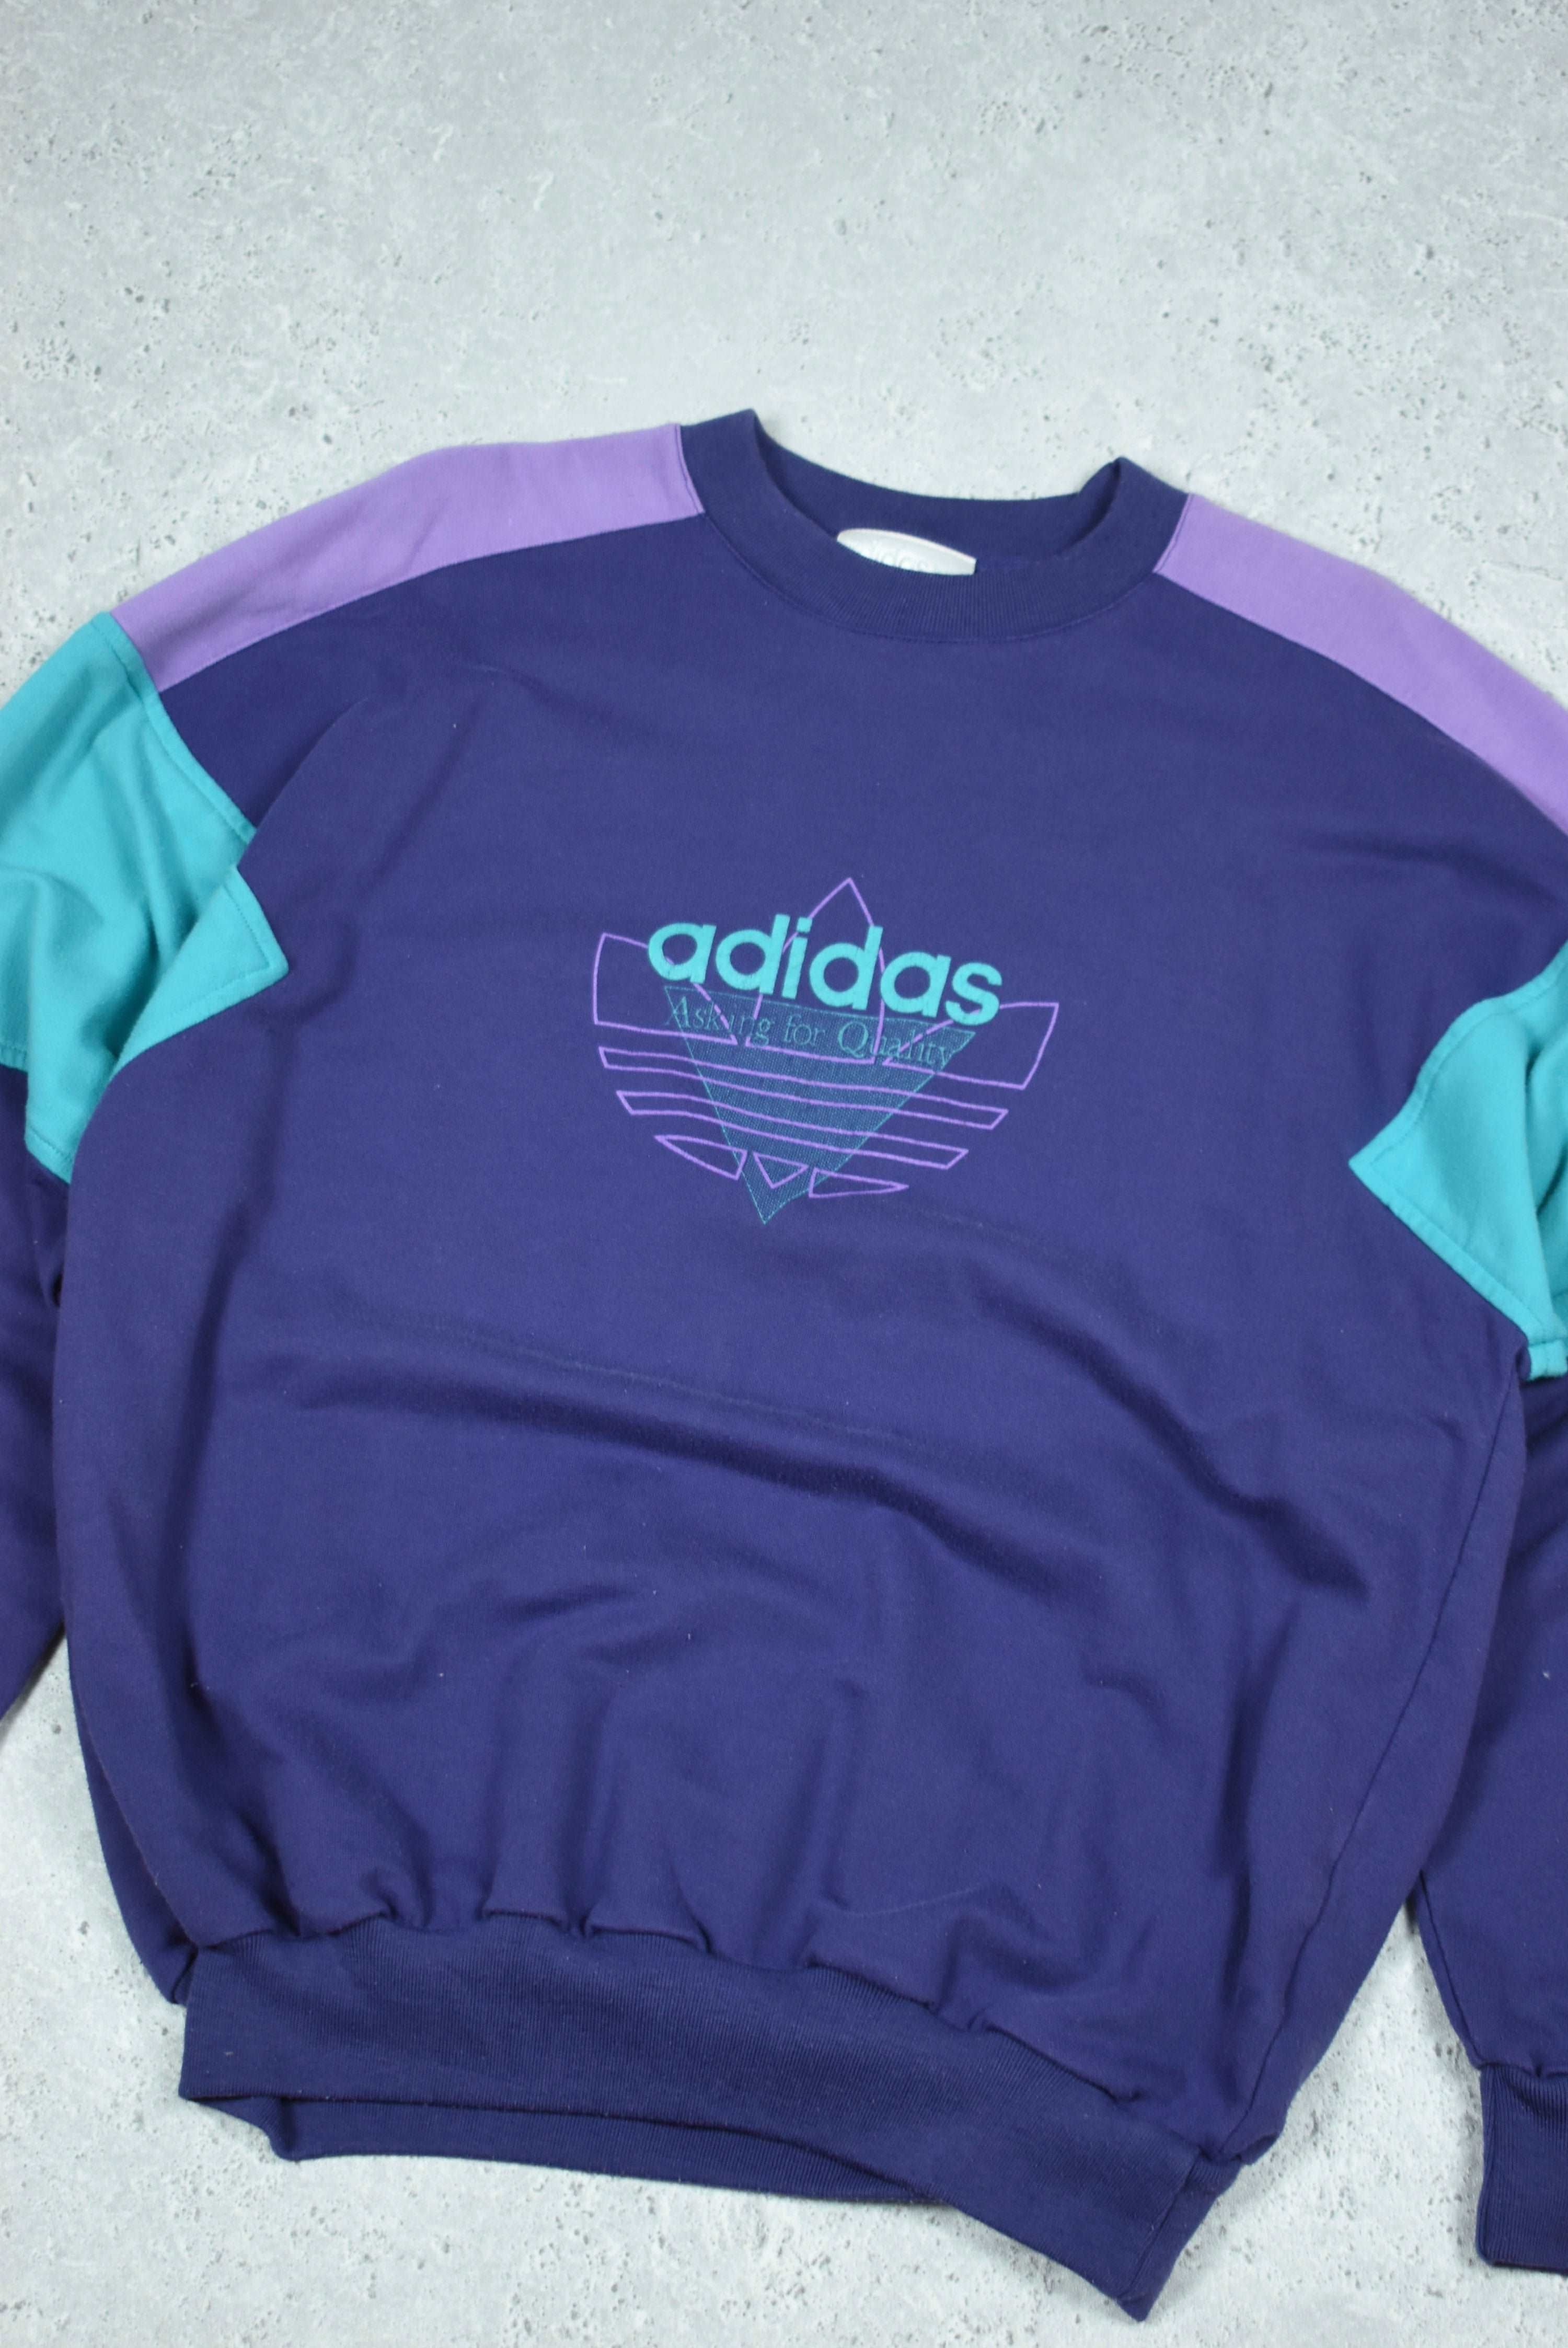 Vintage Adidas 80s Print Sweatshirt Small